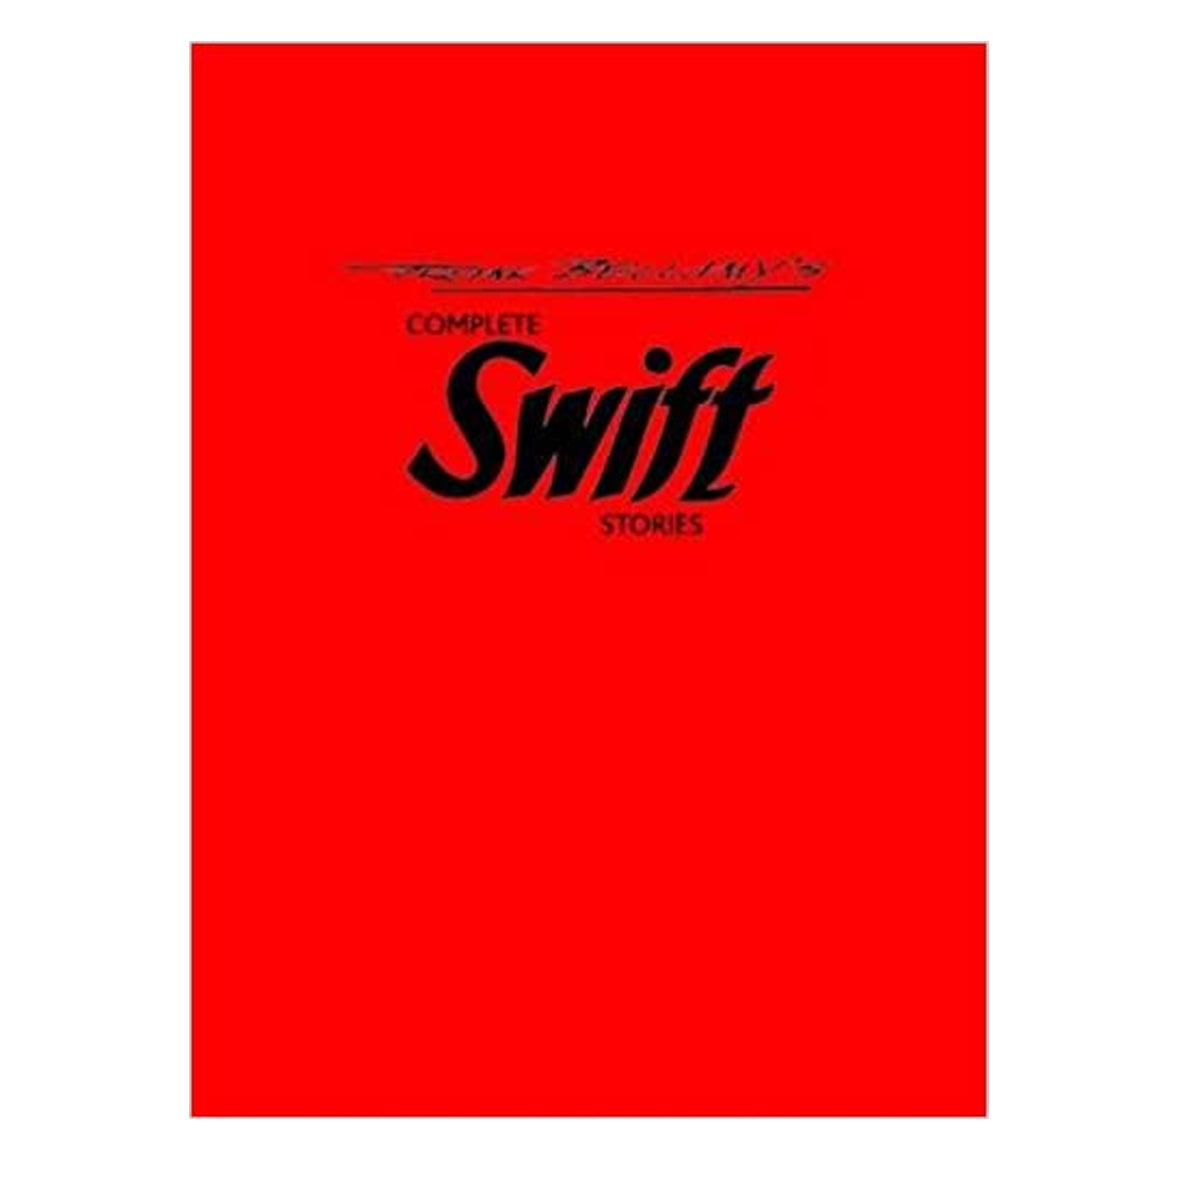 Book - Frank Bellamy's Complete Swift Stories